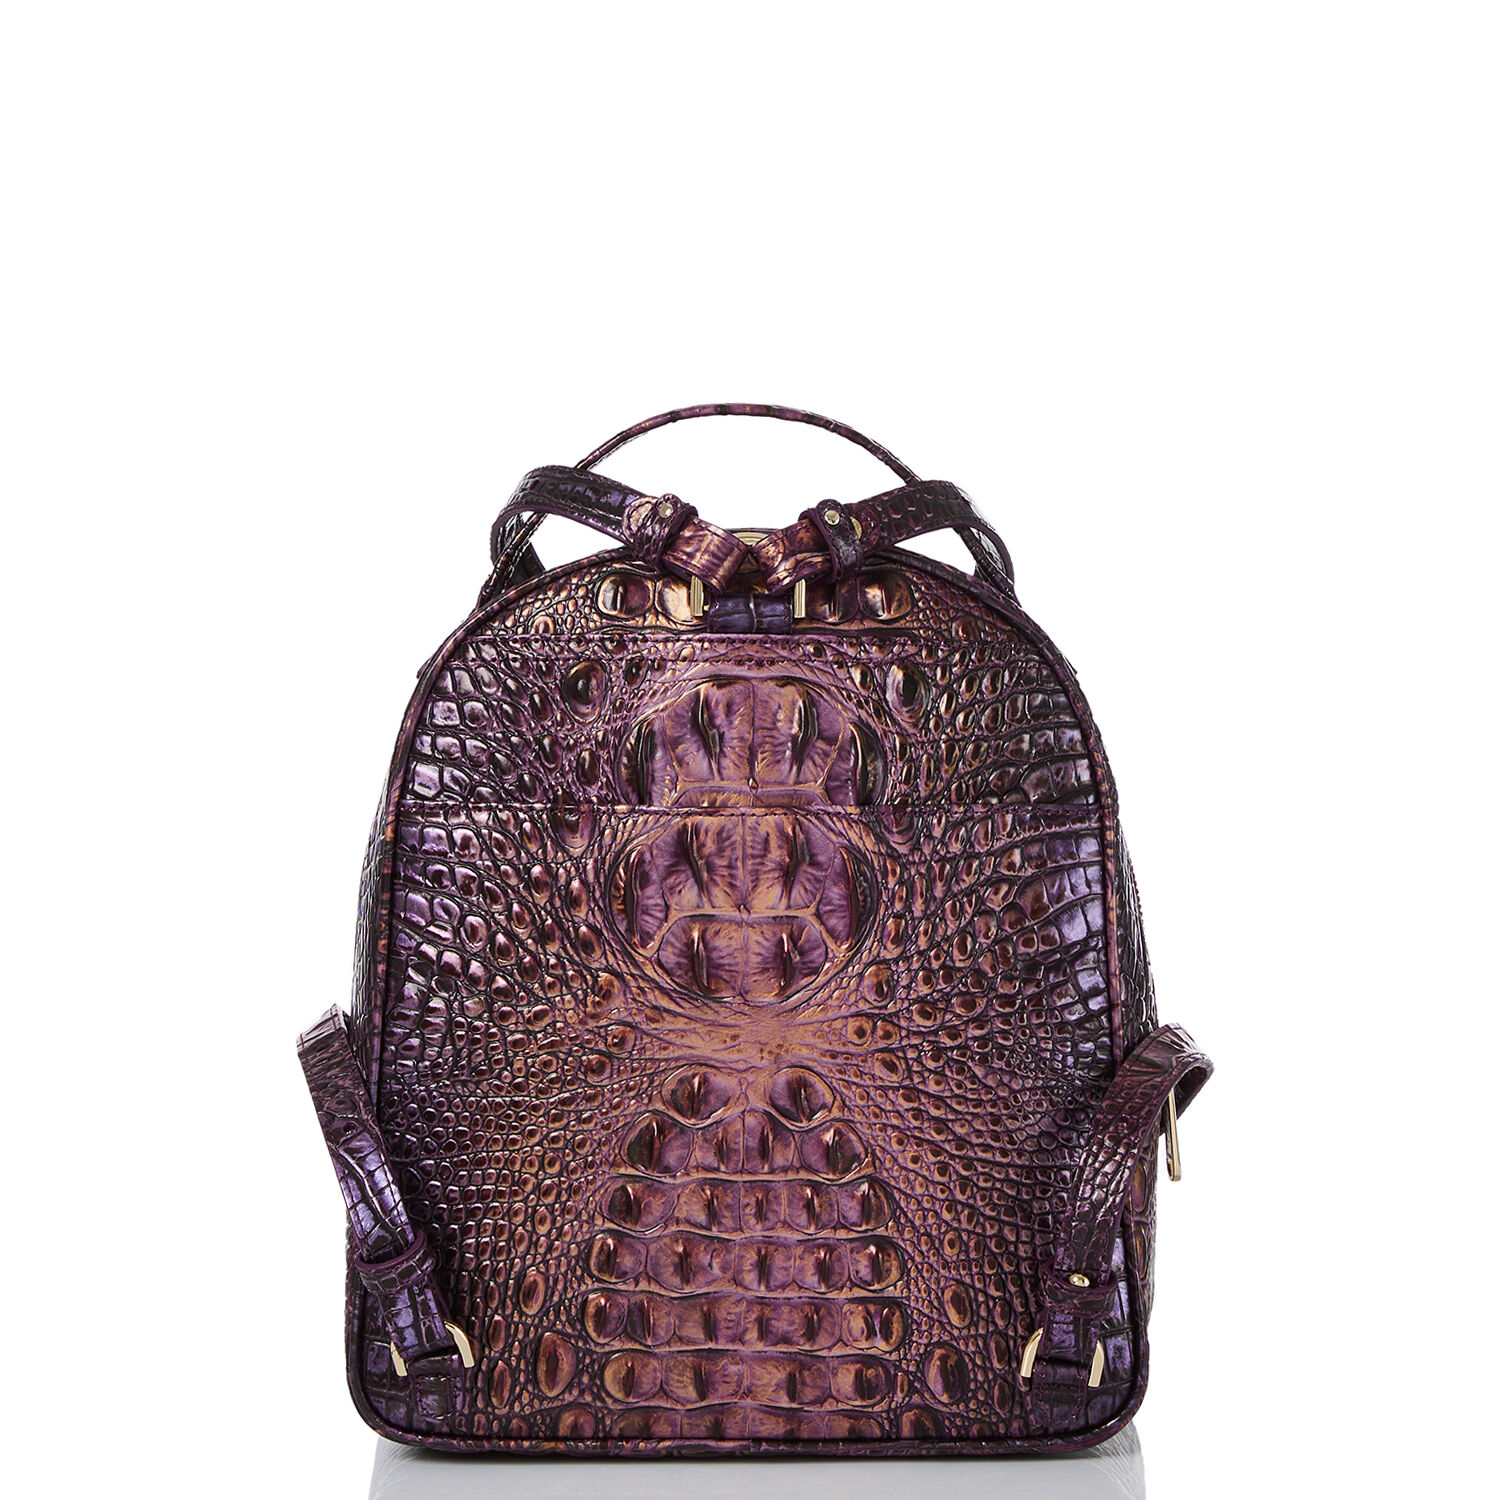 Convertible Backpack Purse - Daisy - The Handbag Store